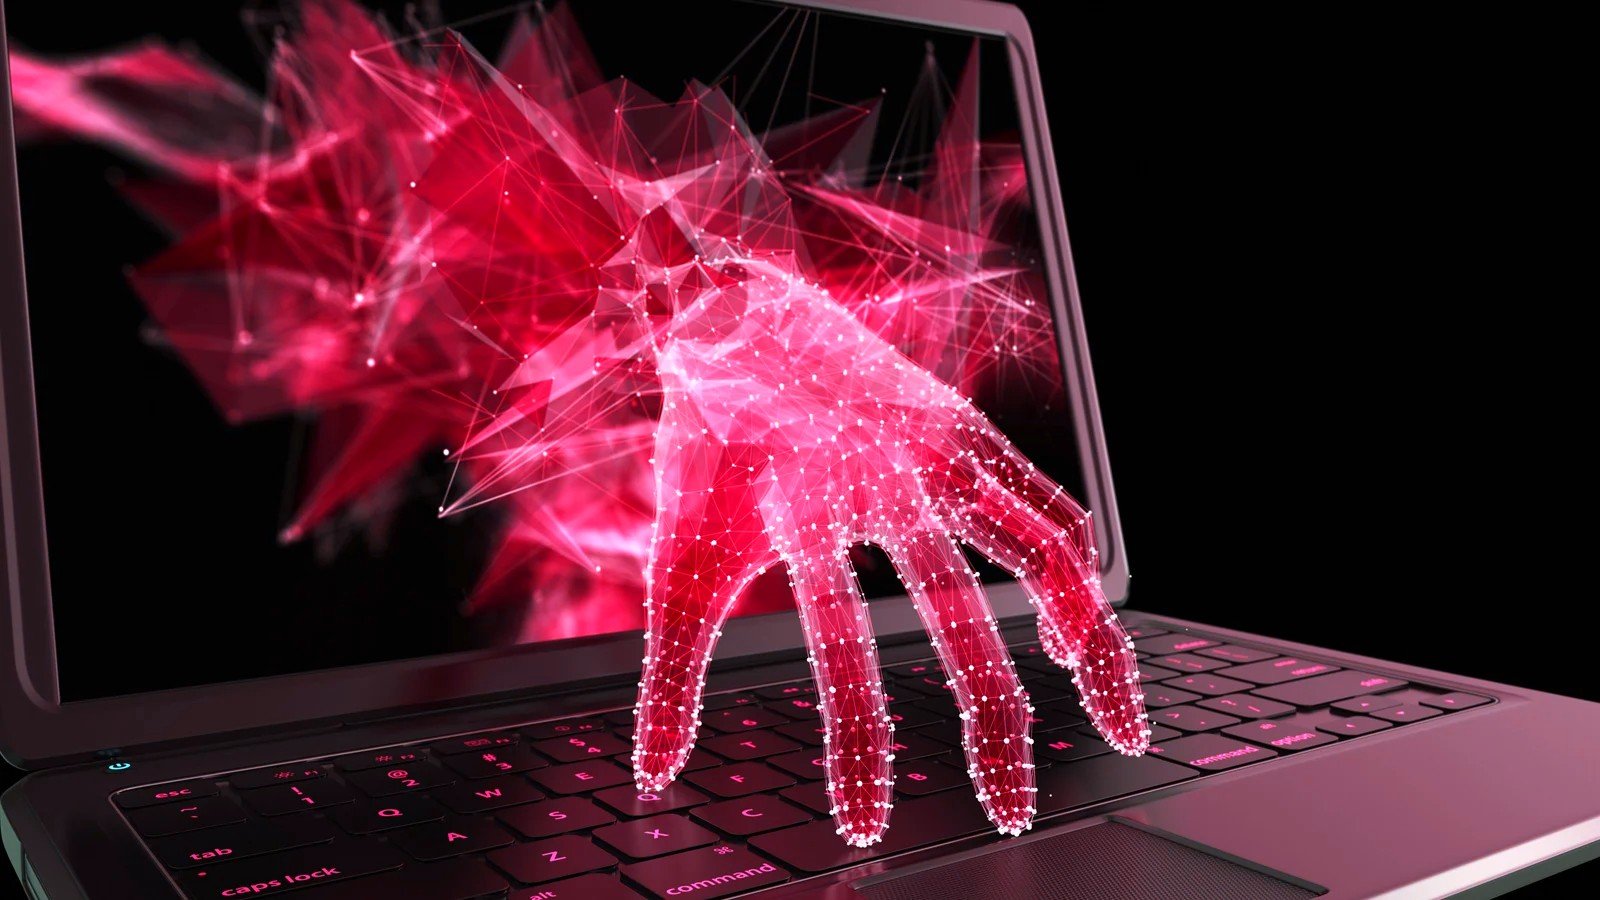 Hand reaching through a computer screen